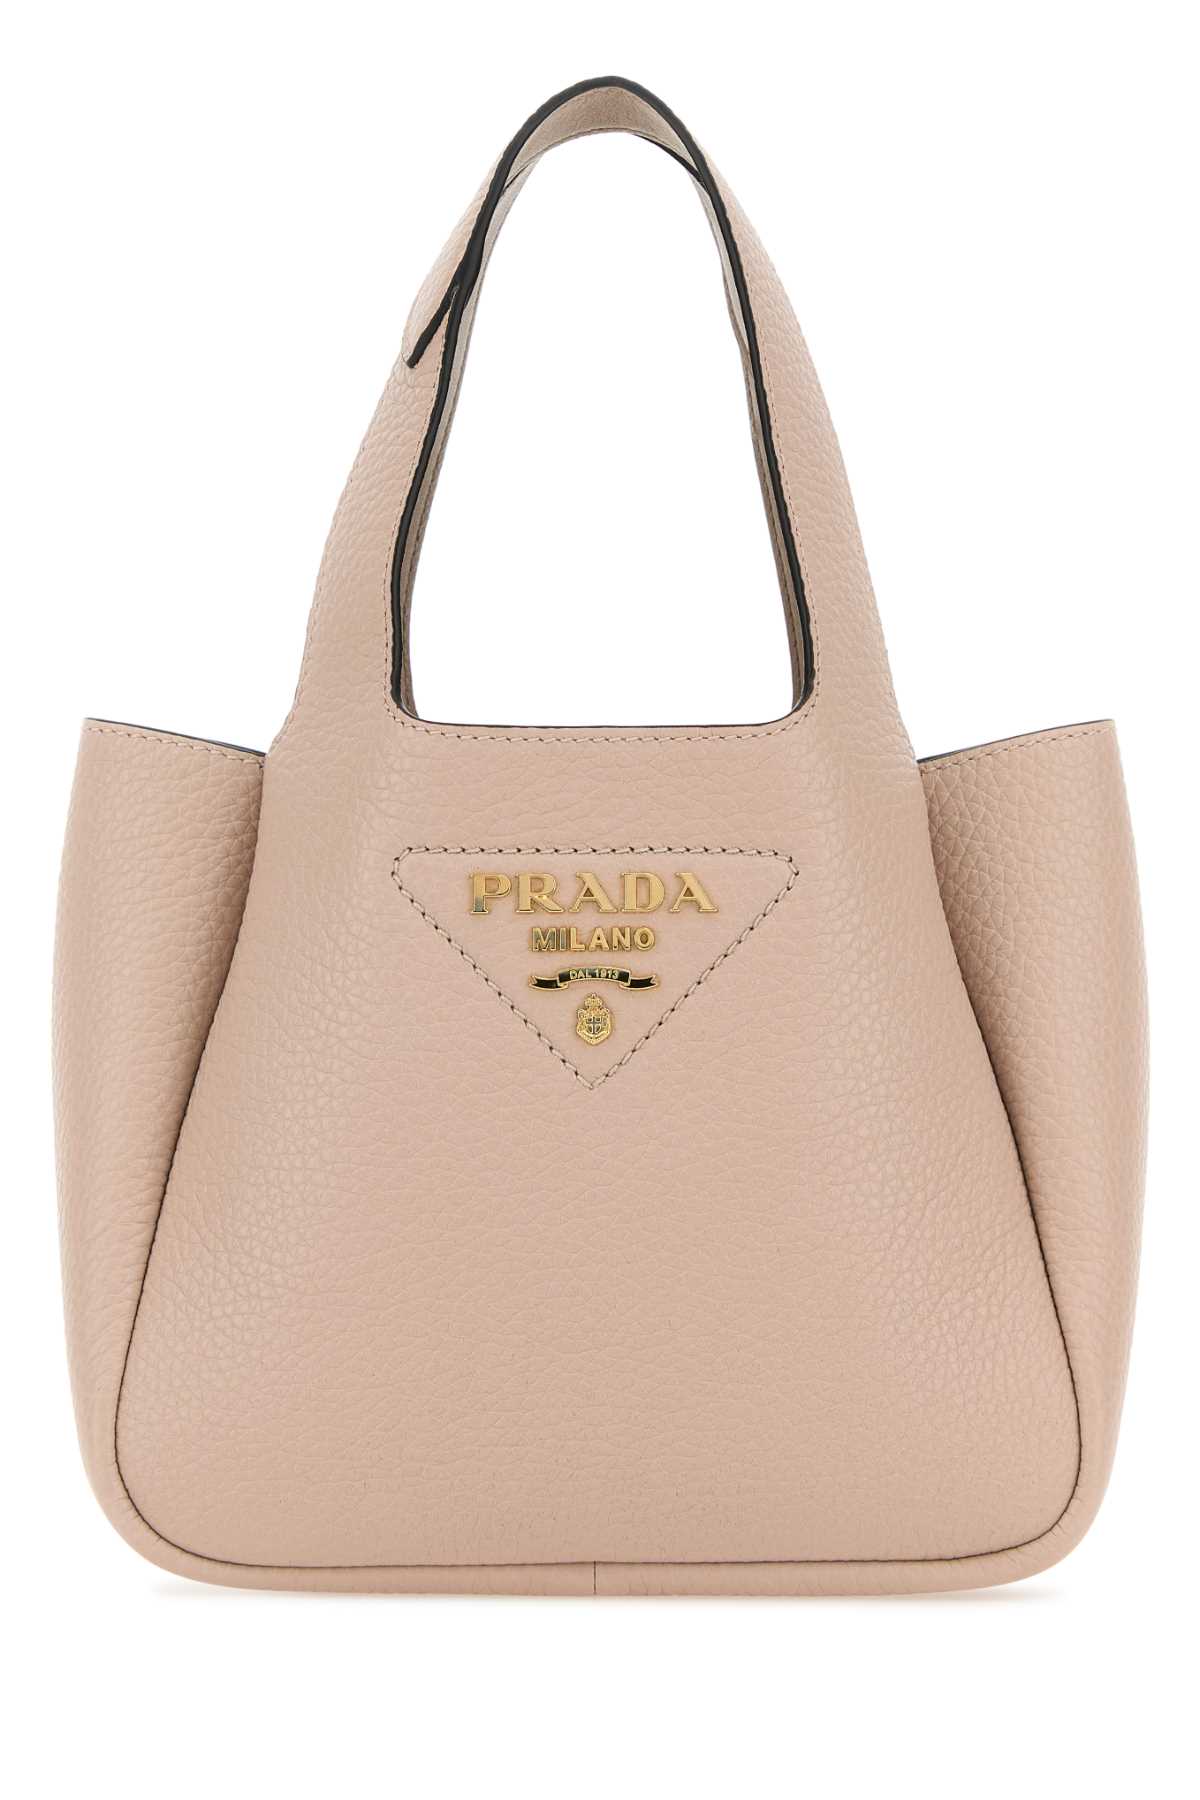 Prada Light Pink Leather Handbag